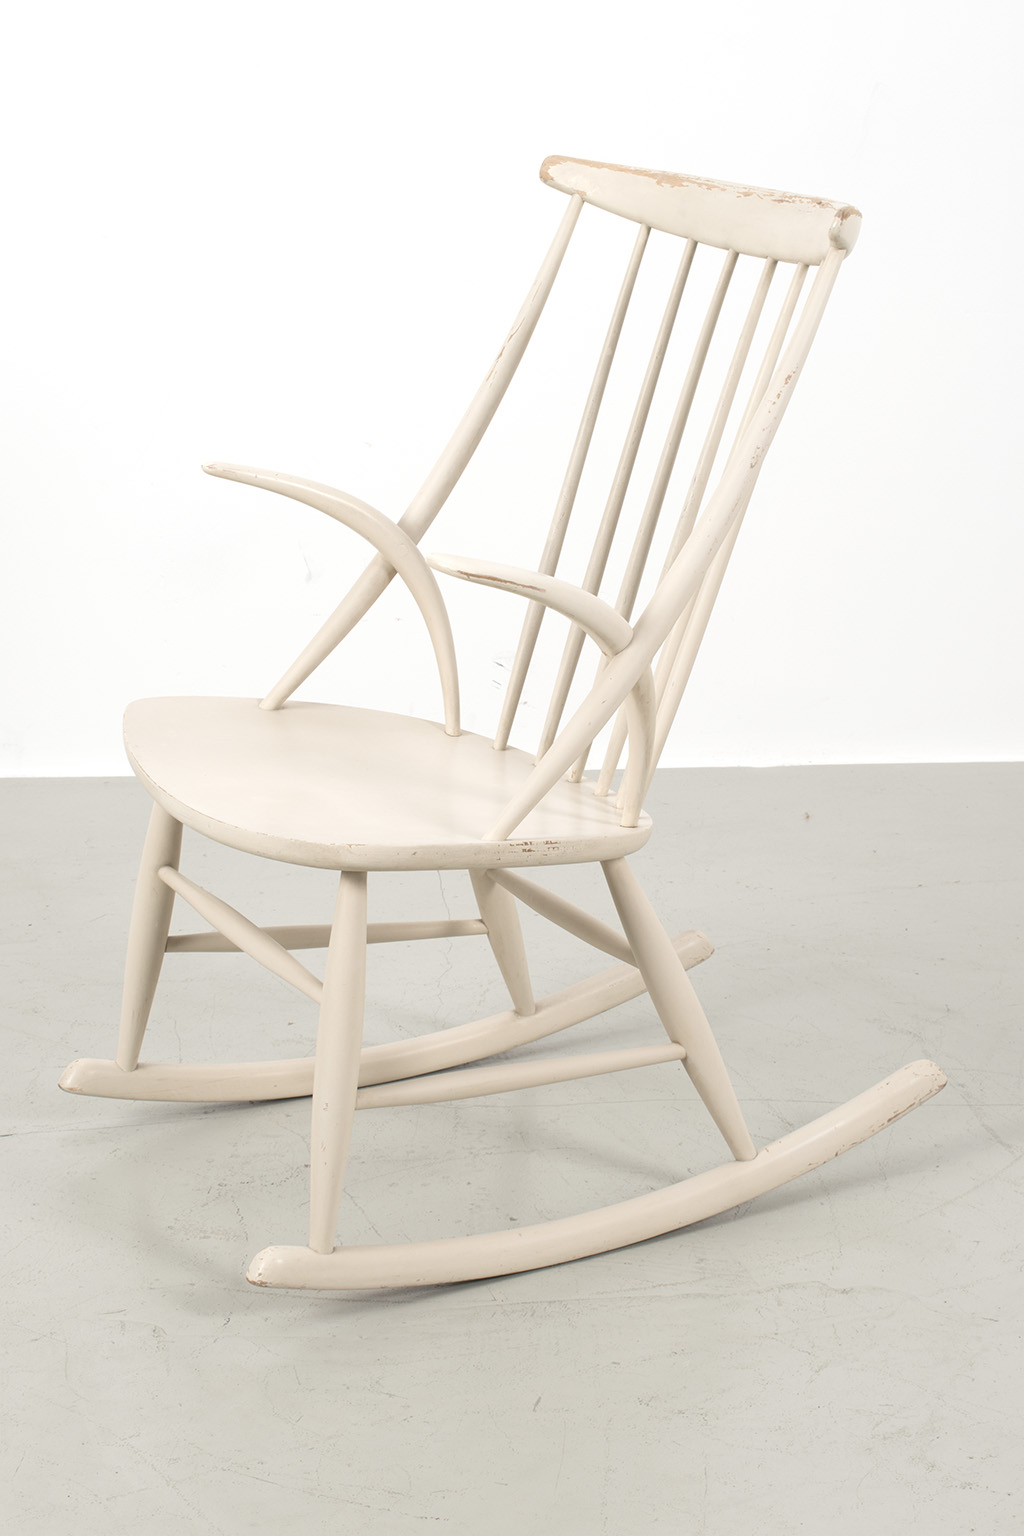 Illum Wikkelso rocking chair